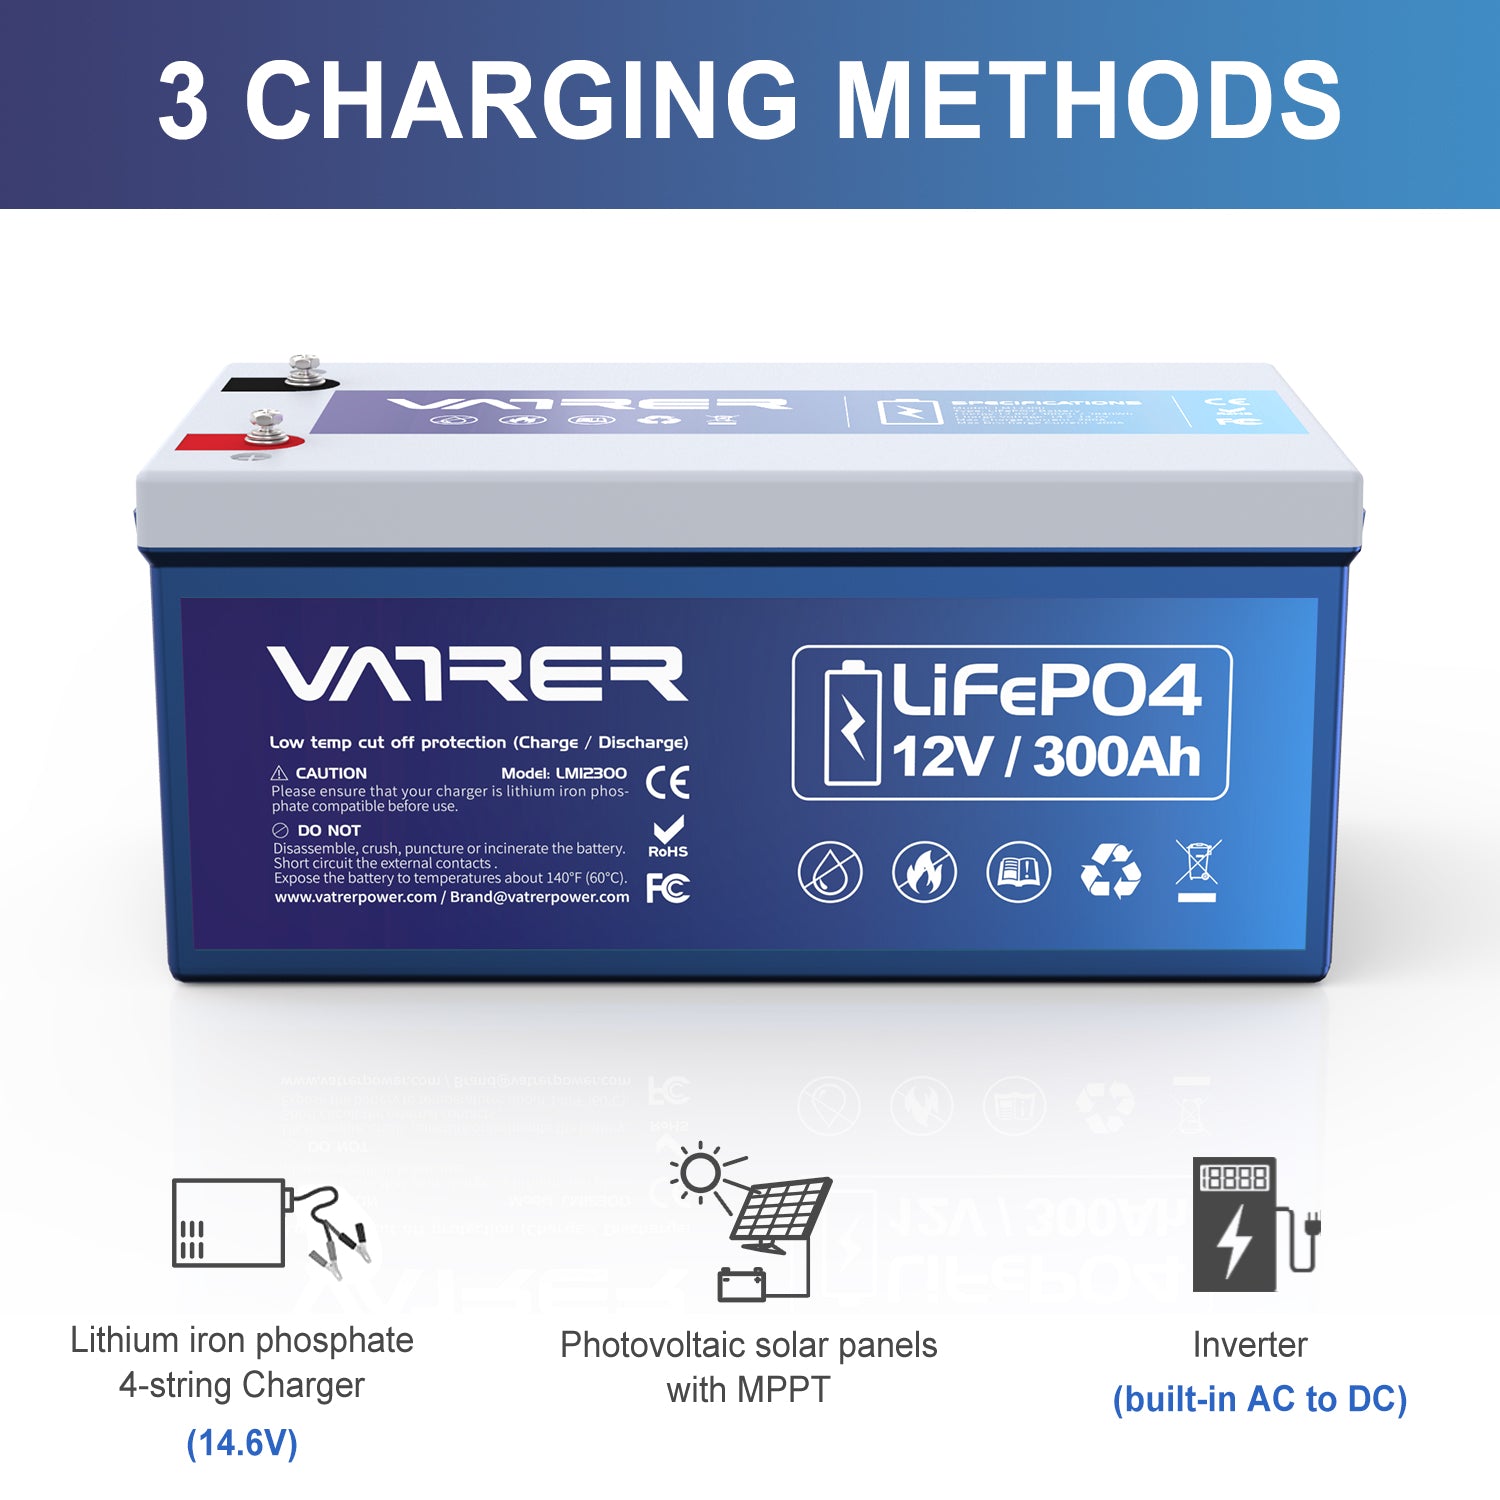 12V 7Ah LiFePO4 Deep Cycle Battery - Vatrer-Vatrer